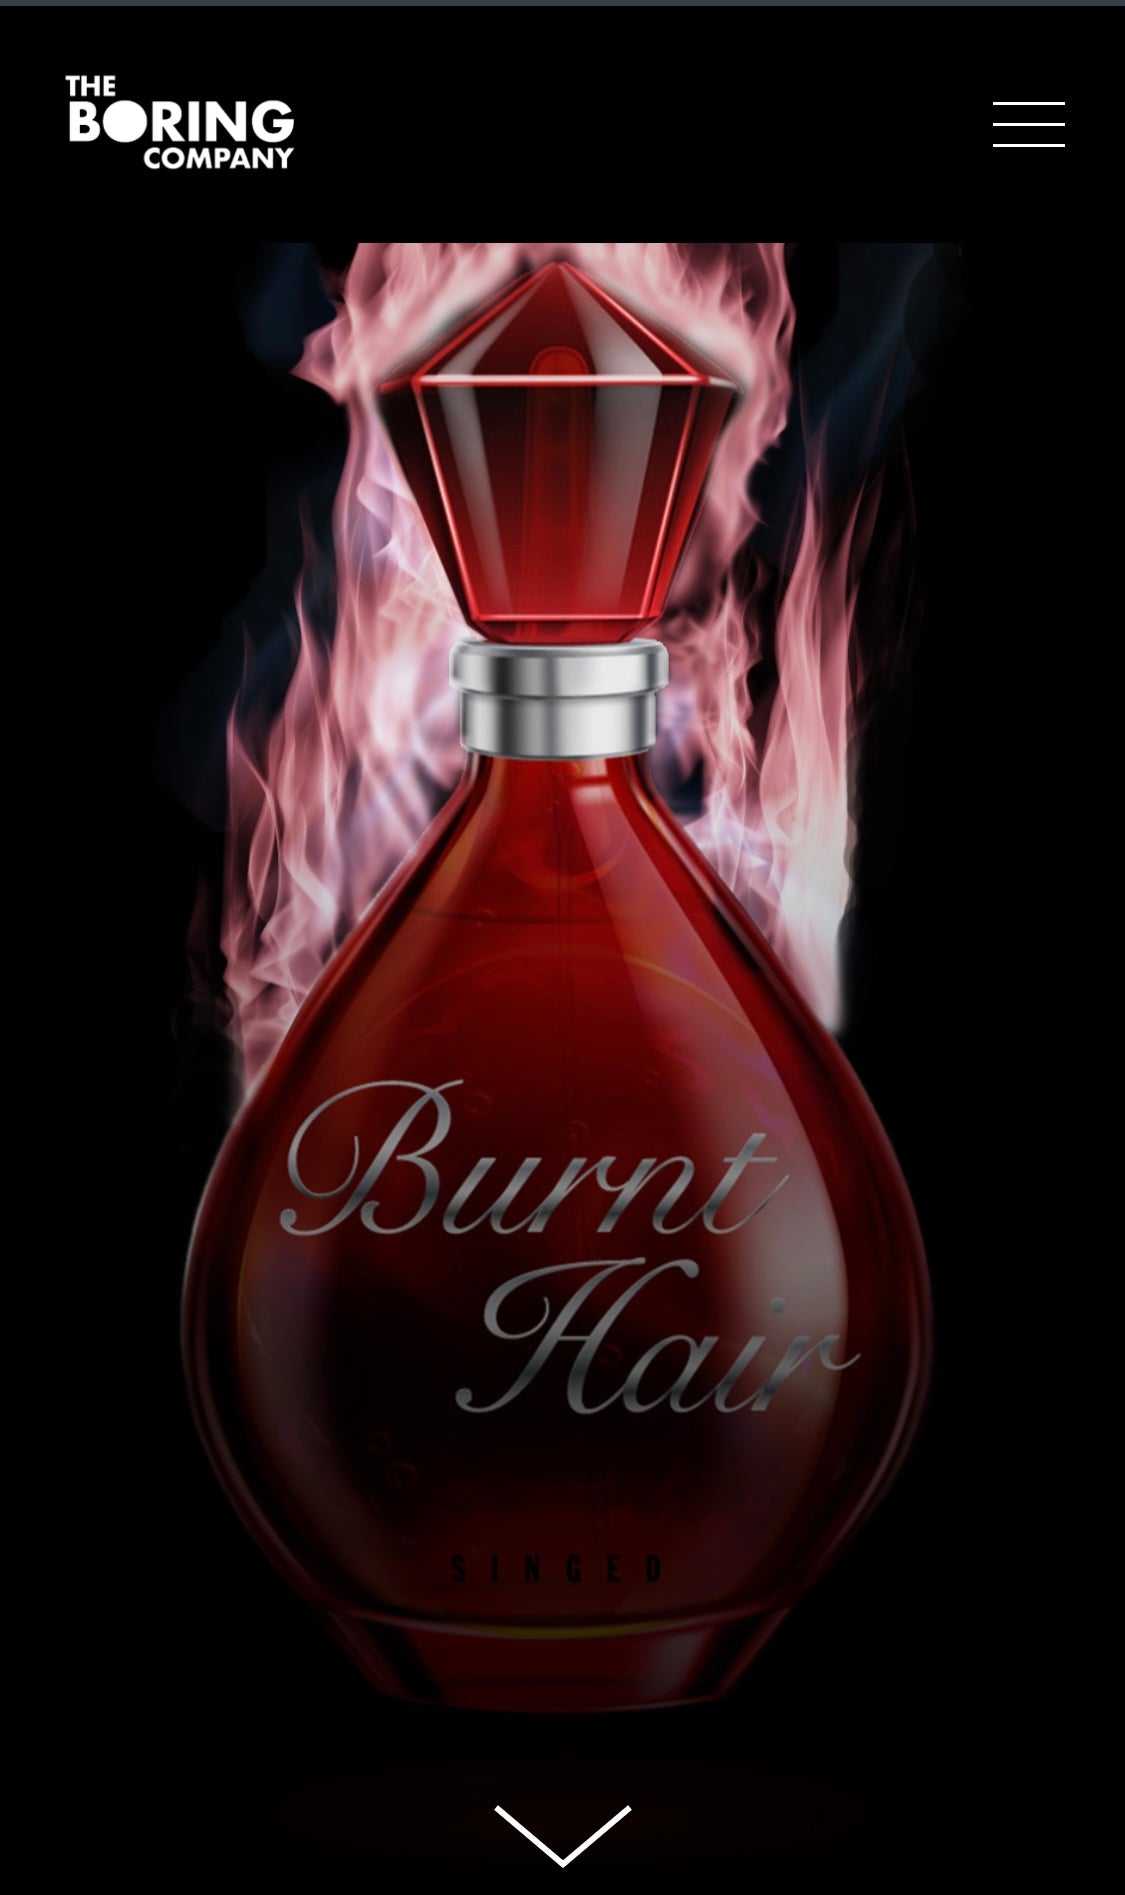 The Boring Company Debuts a ‘Burnt Hair’ Fragrance